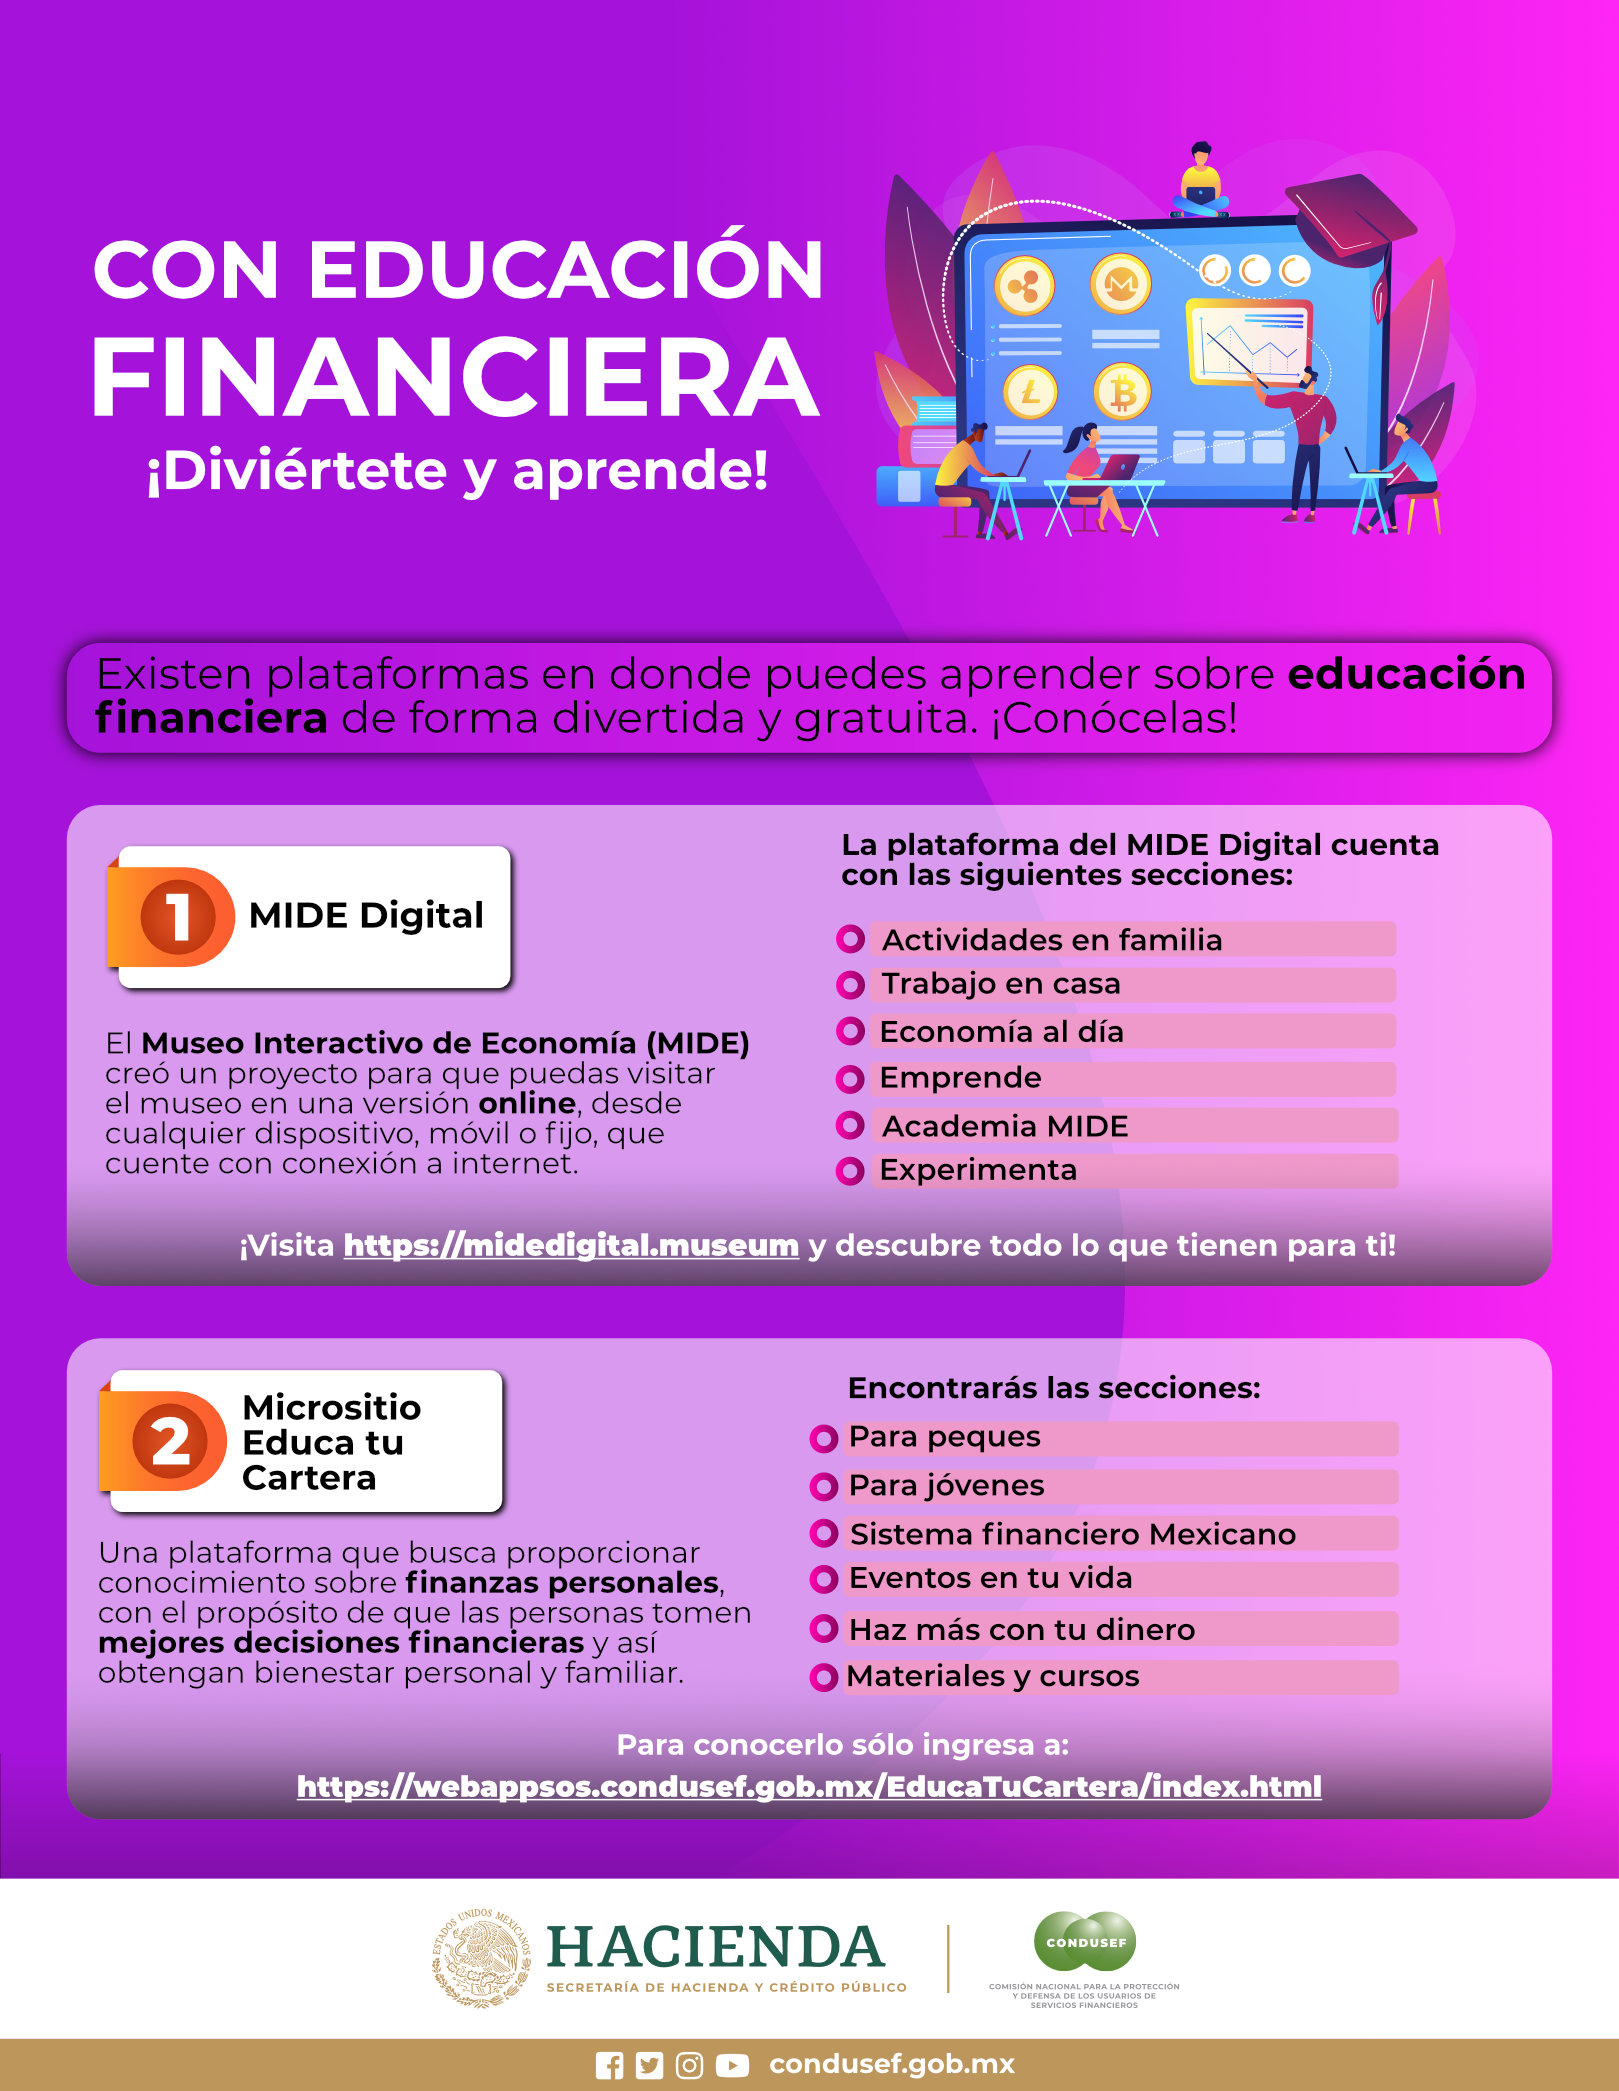 /cms/uploads/image/file/642024/Infografias_Con_Educaci_n_Financiera.jpg